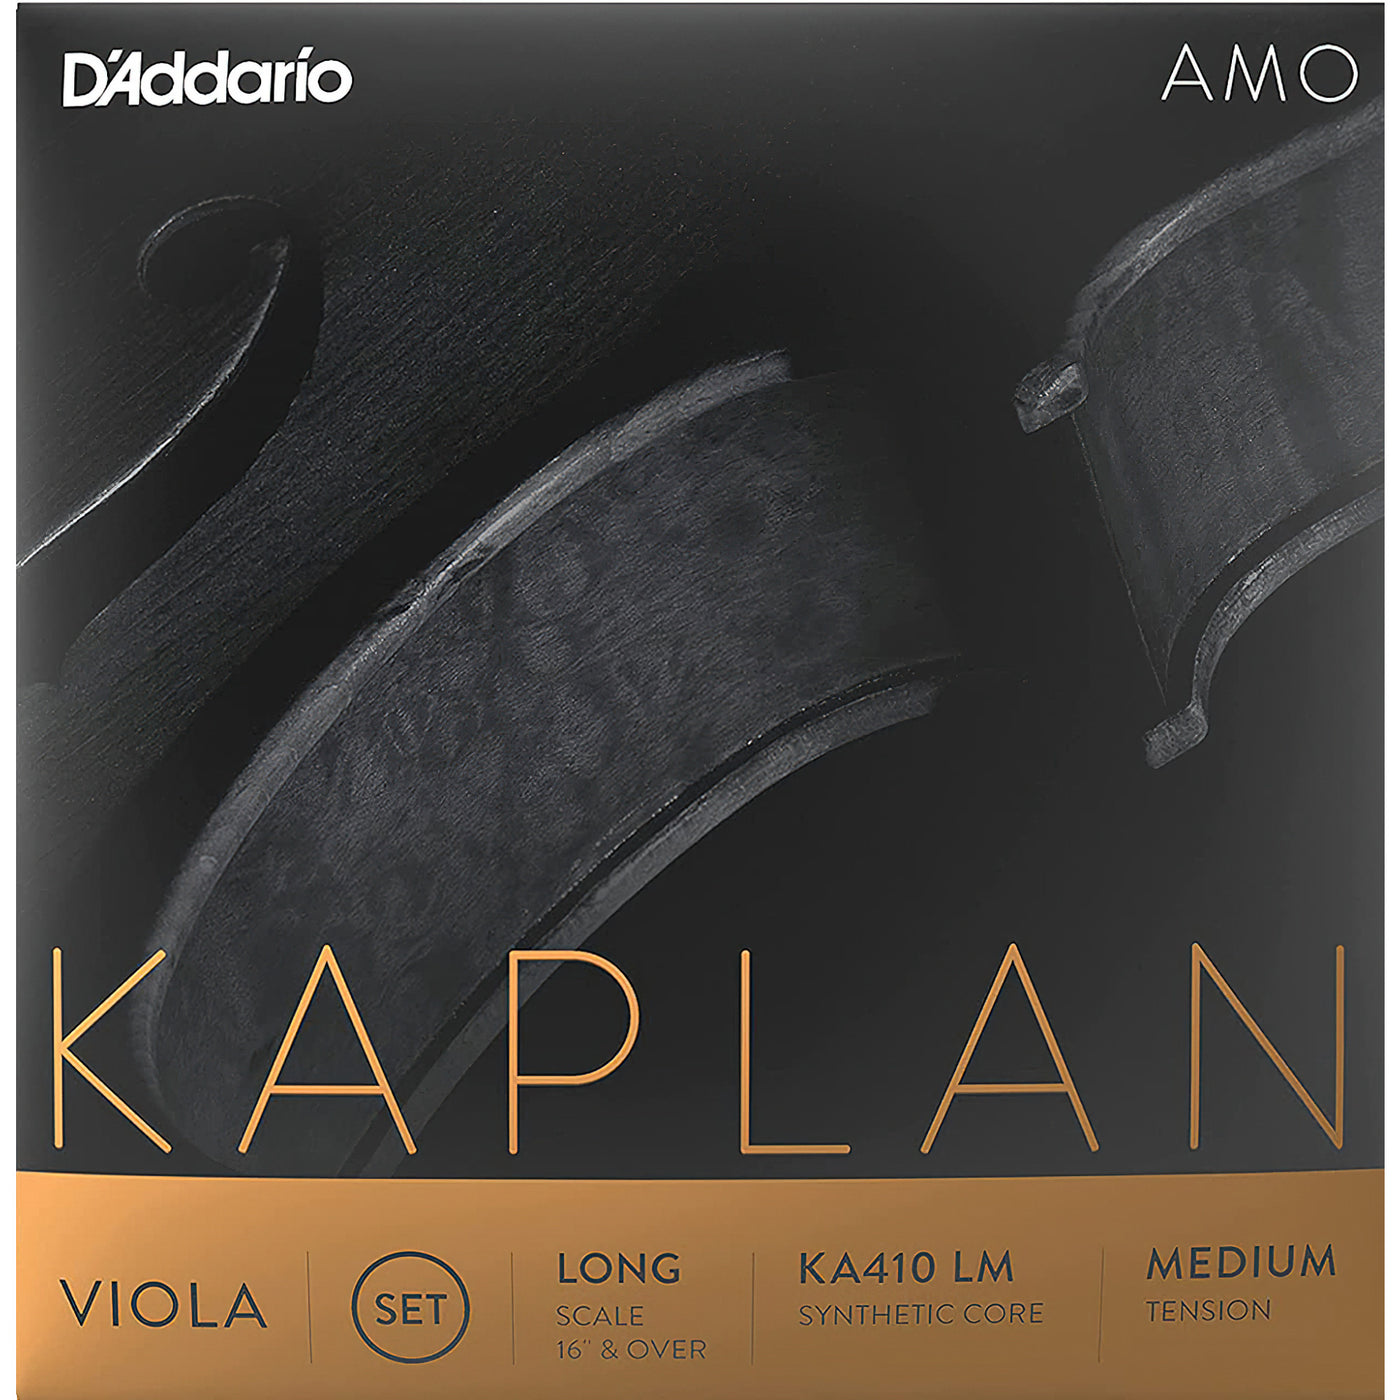 D'Addario KA410 Kaplan Amo Viola String Set, Long Size (KA410 LM)